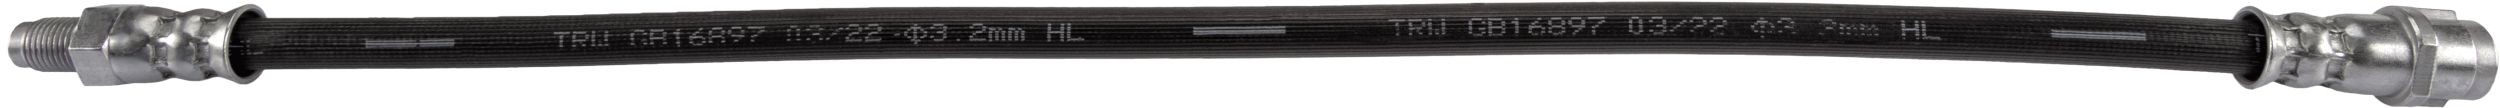 TRW 428 mm, External Thread, Internal Thread Length: 428mm Brake line PHB2047 buy